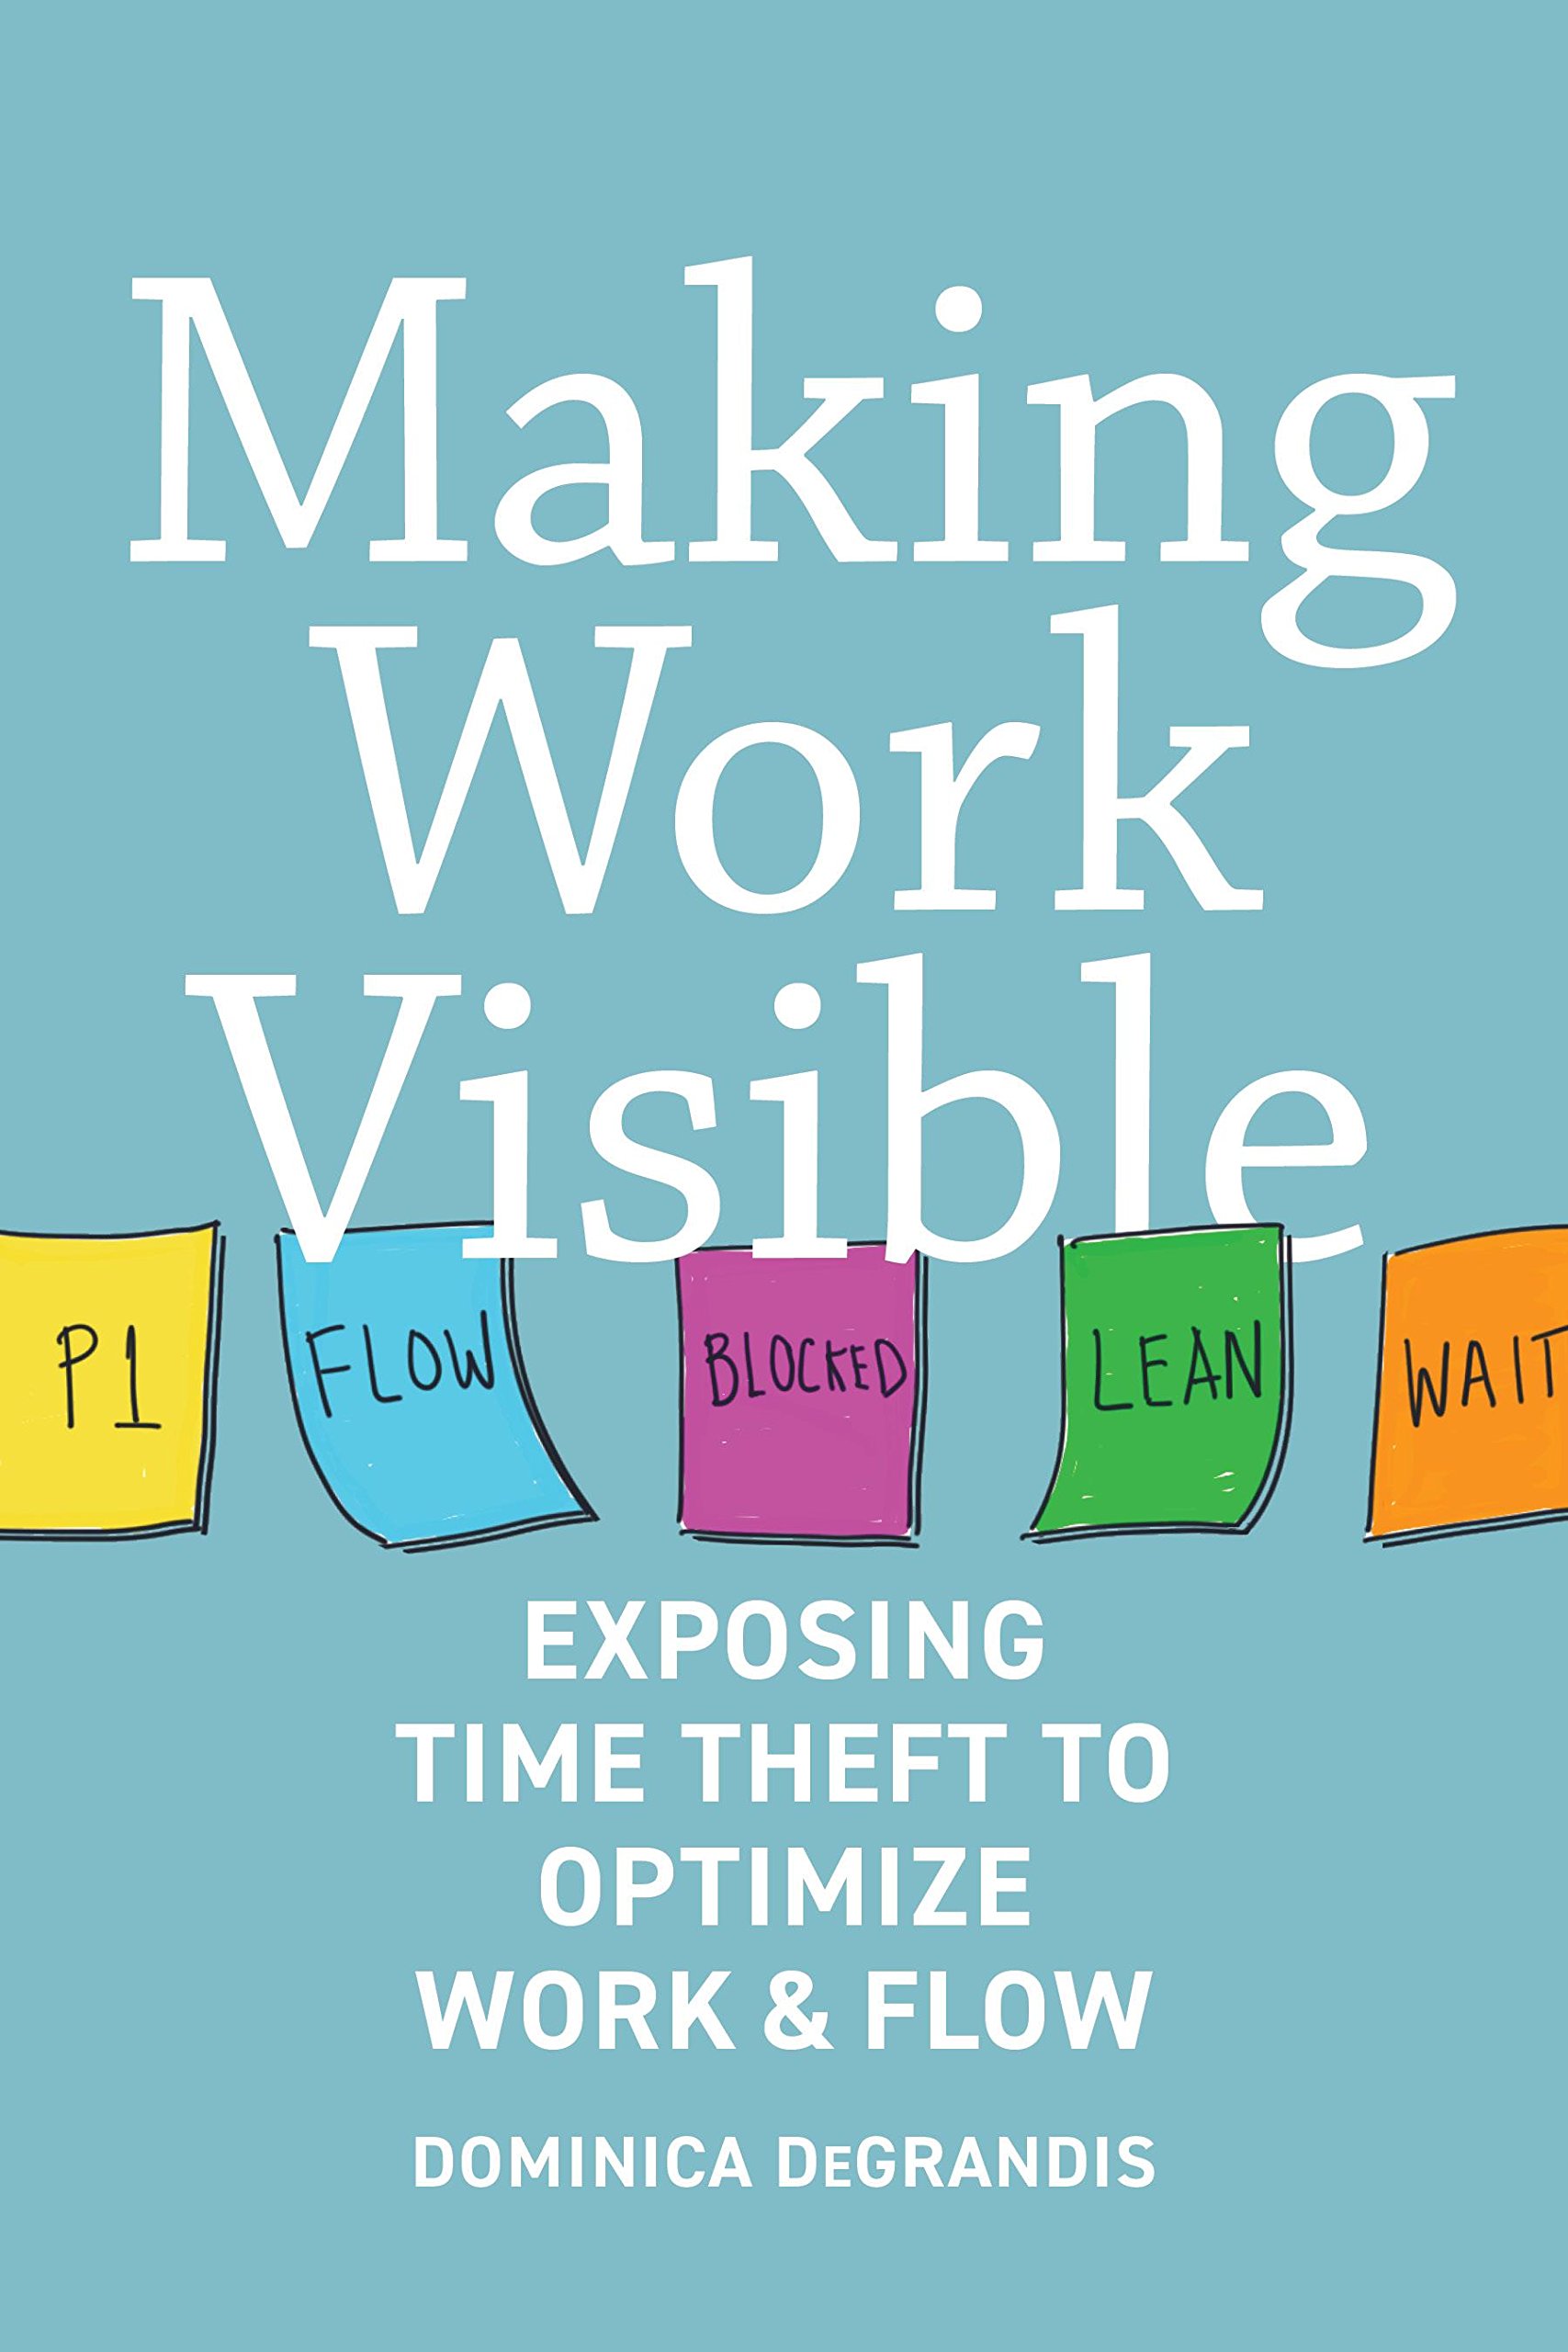 Making work visible (2017, IT Revolution Press)